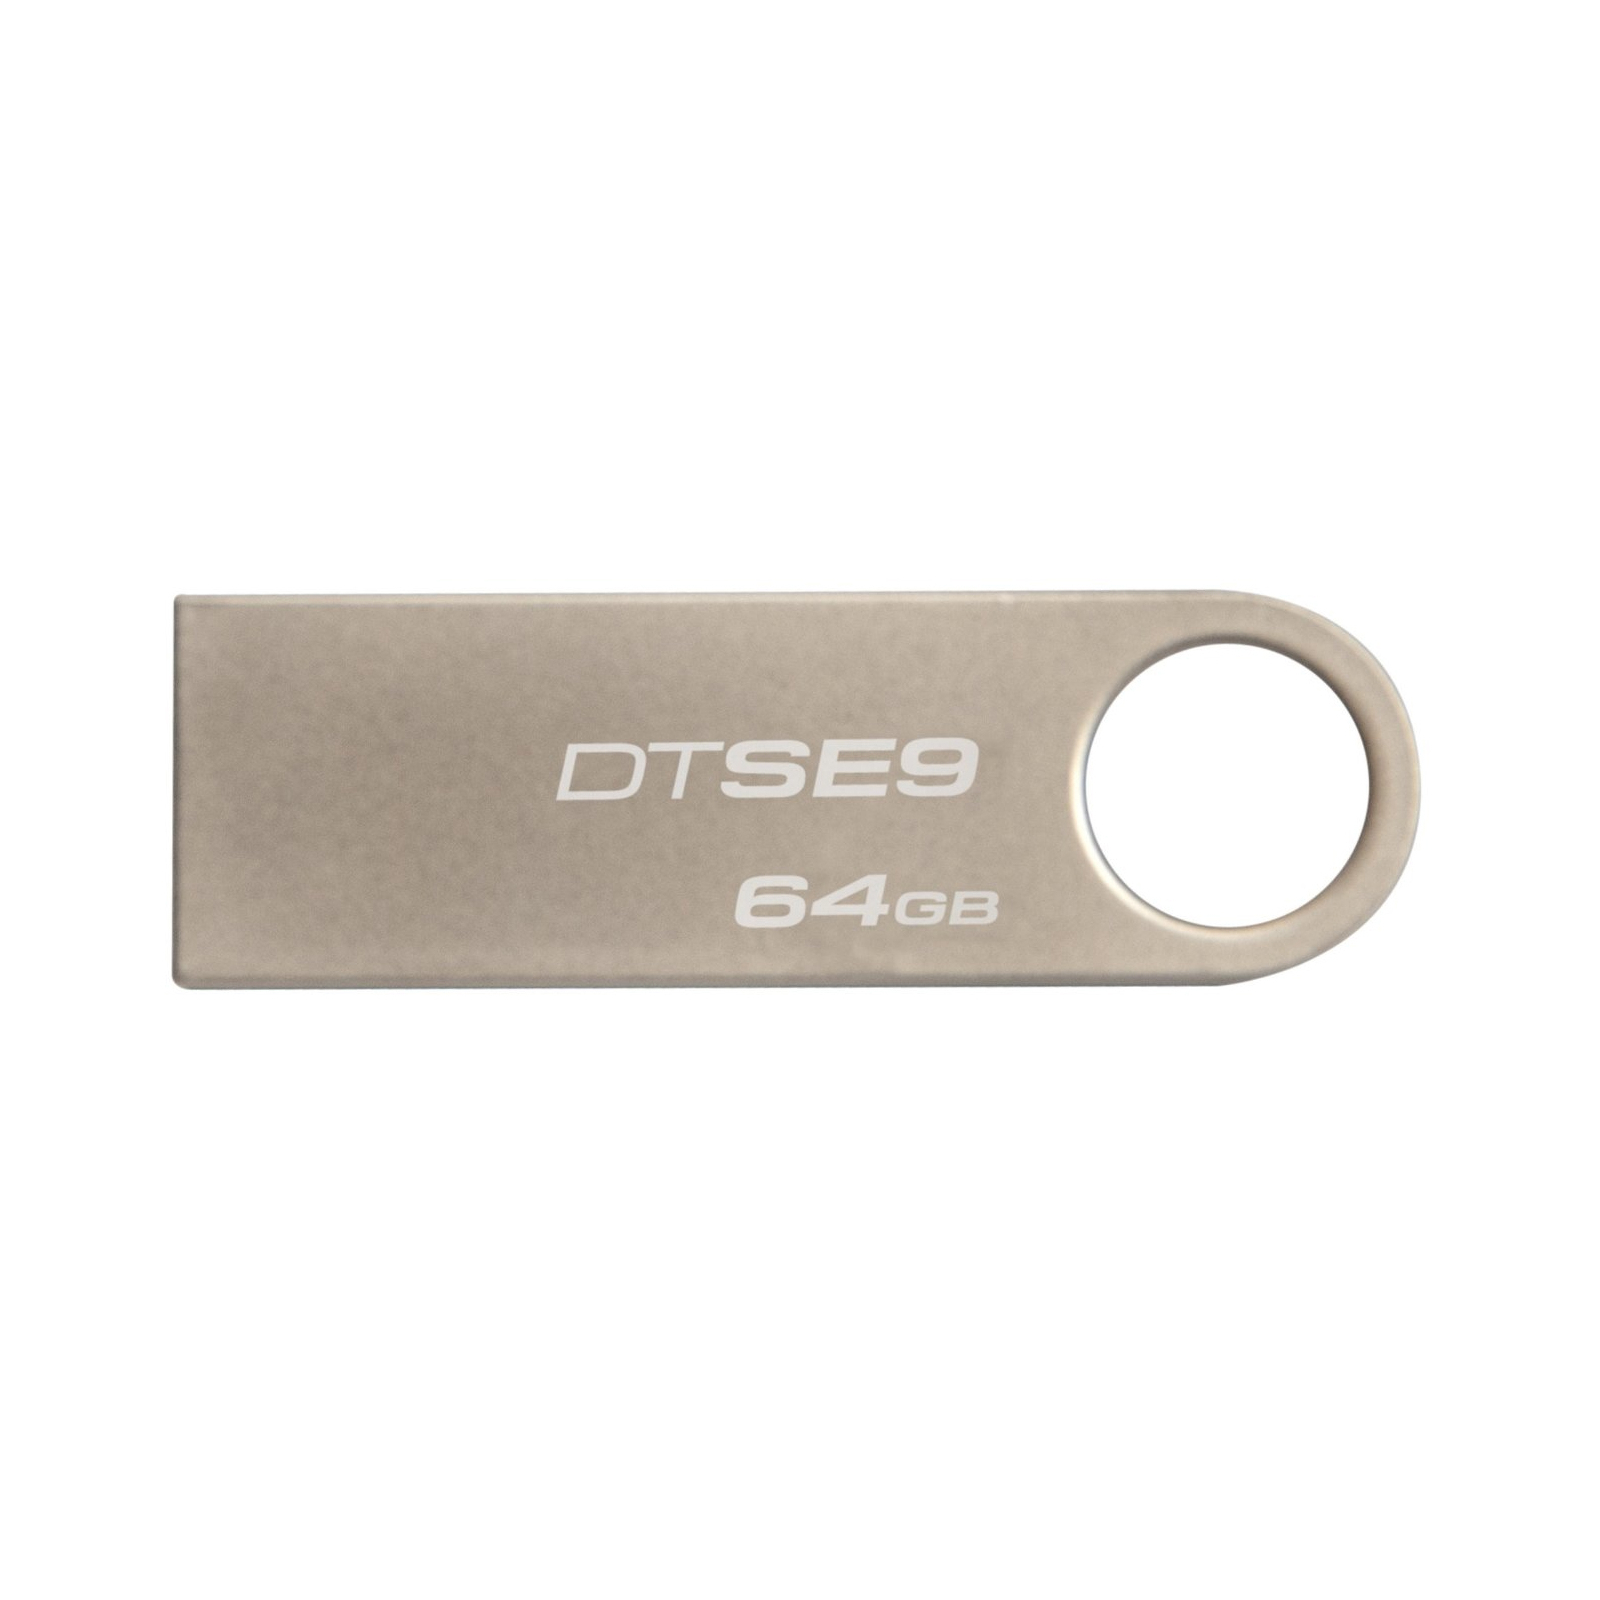 USB флеш накопитель Kingston 64GB DataTraveler SE9 Silver USB 2.0 (DTSE9G2/64GBZ)